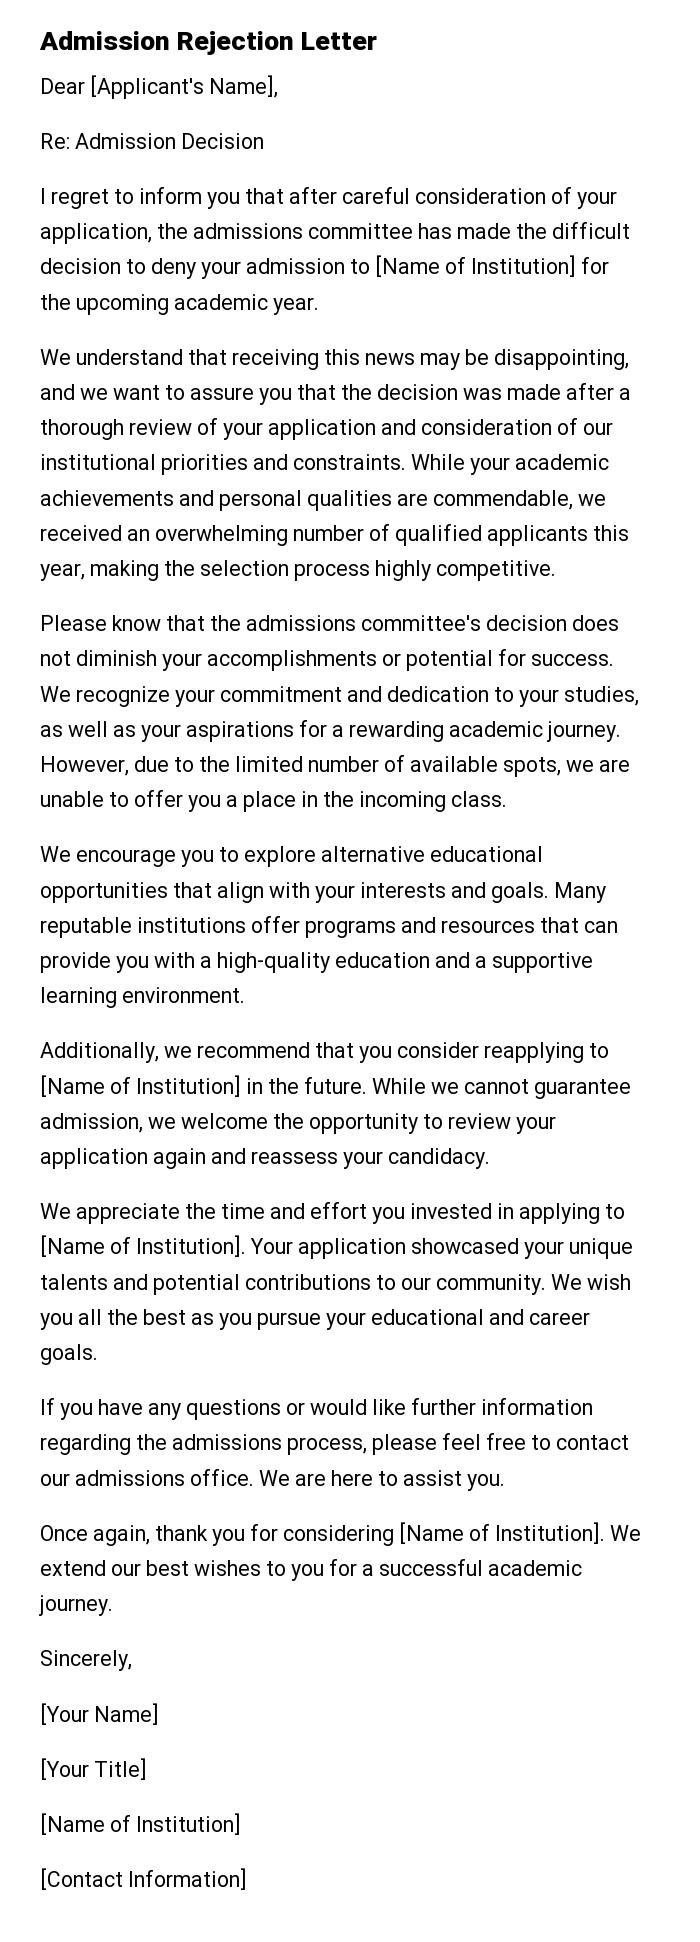 Admission Rejection Letter